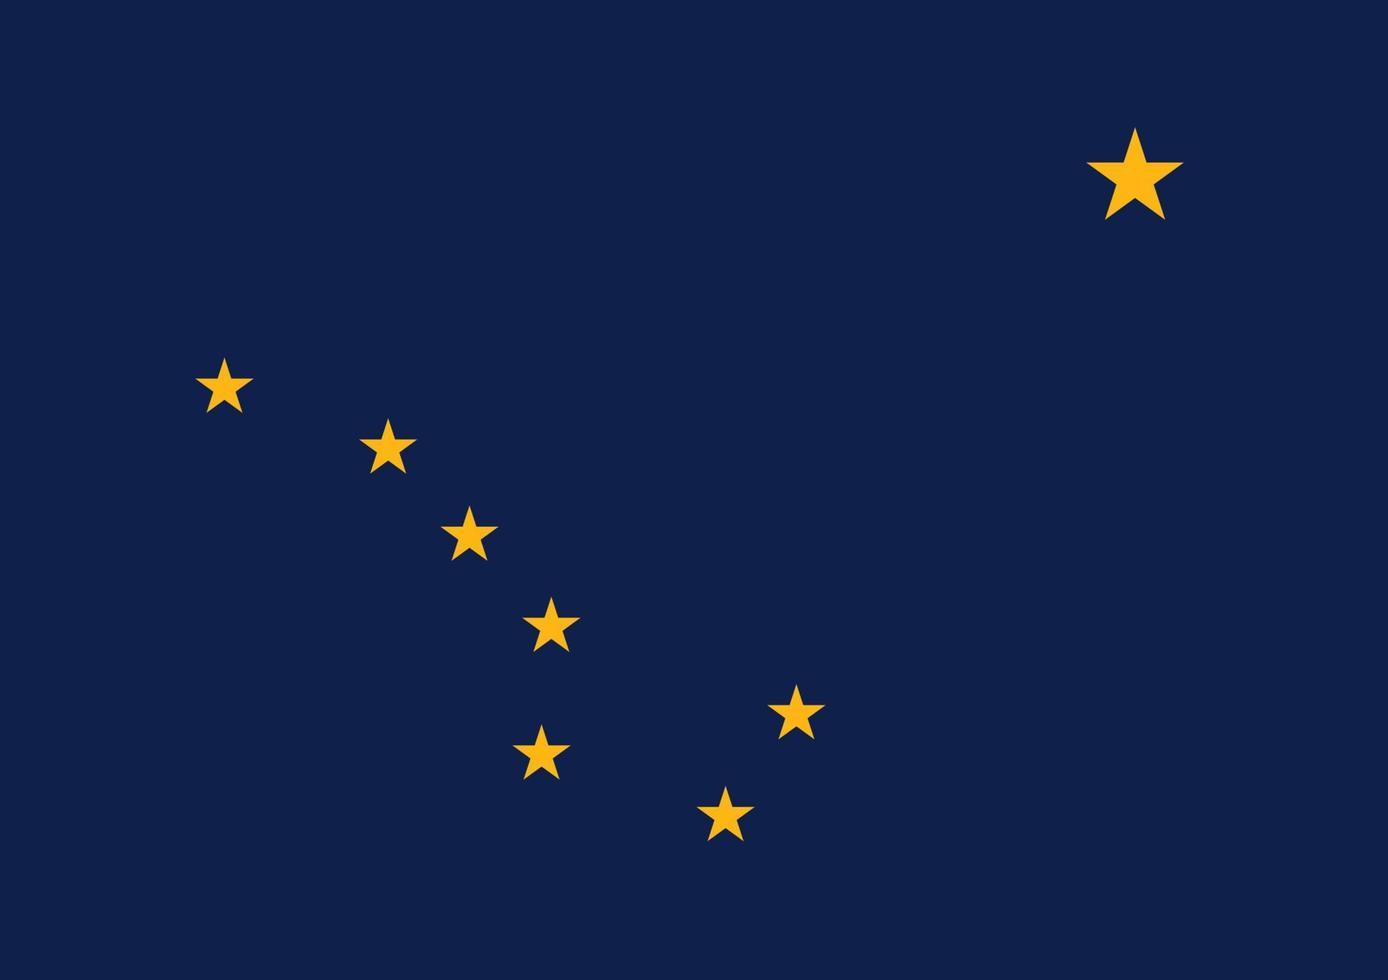 Flag Alaska vector illustration symbol national country icon. Freedom nation flag Alaska independence patriotism celebration design government international official symbolic object culture